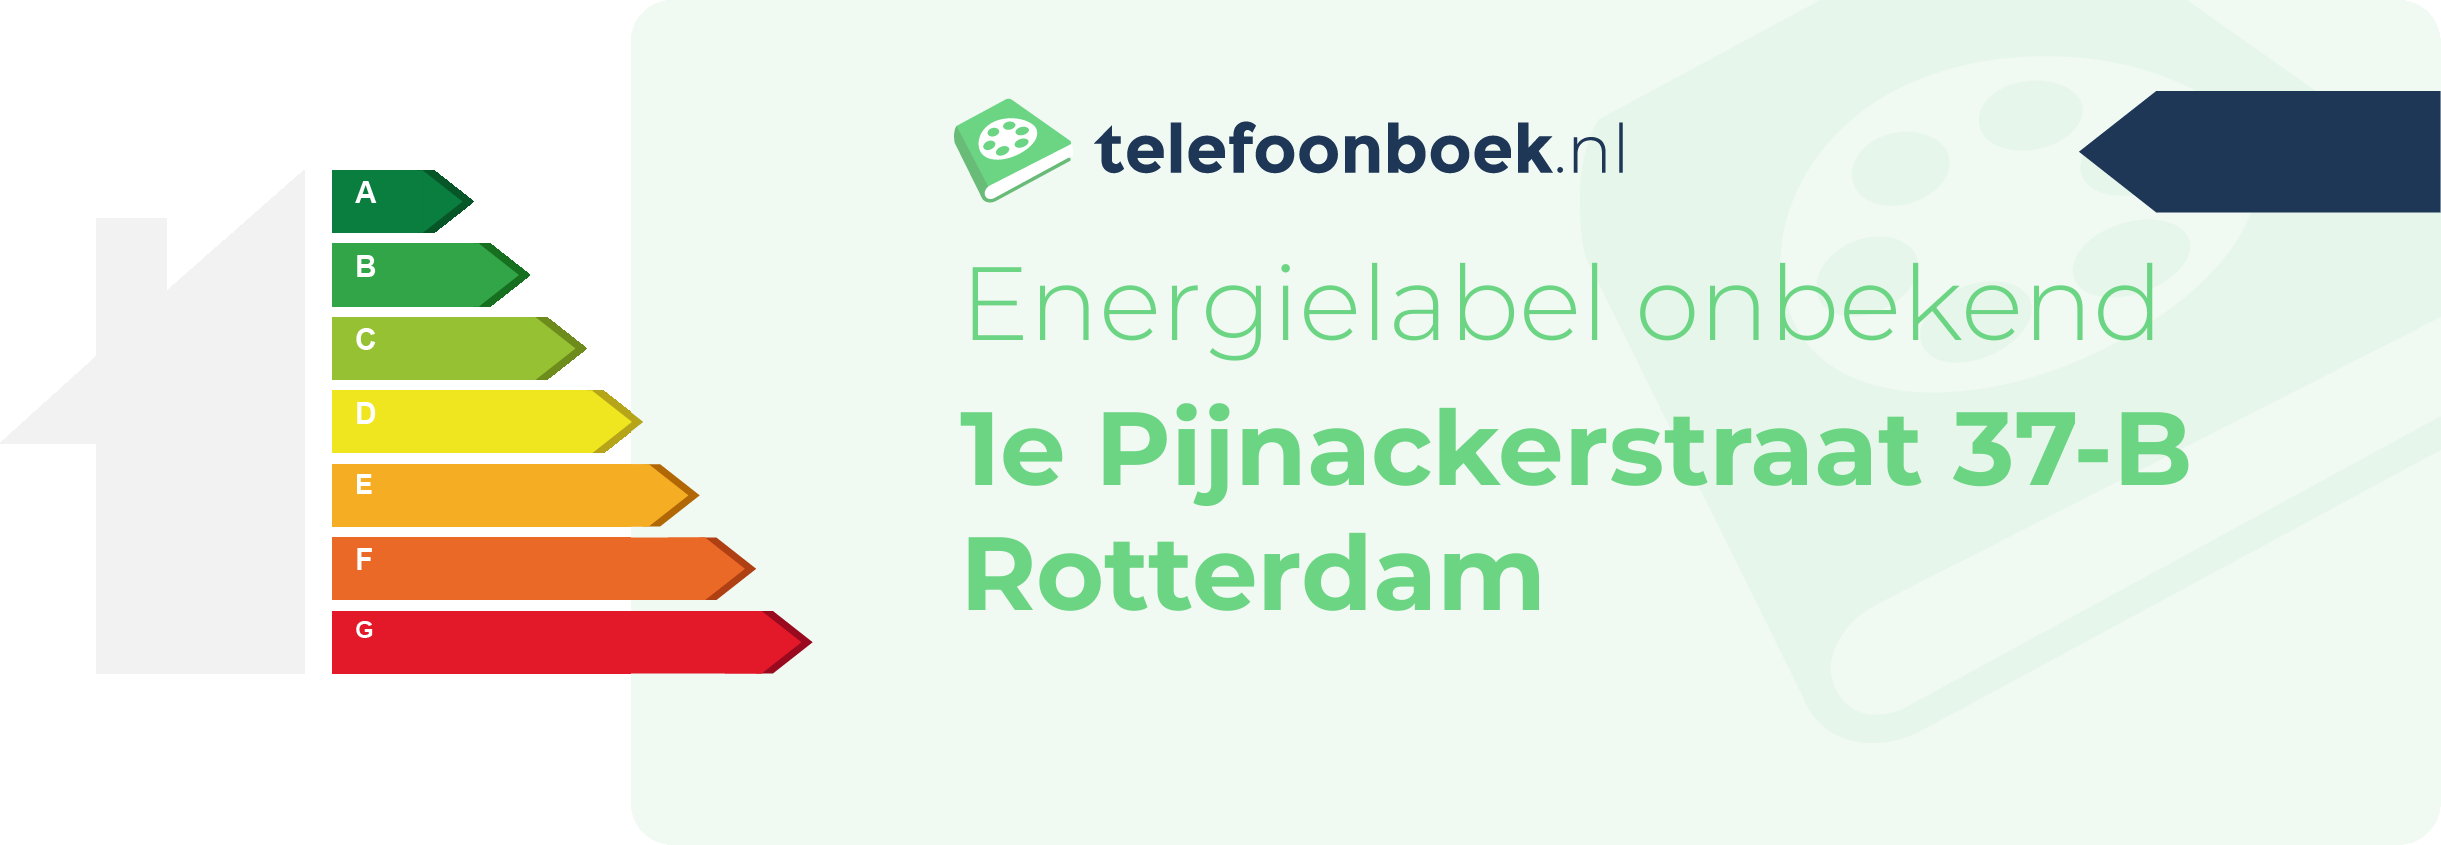 Energielabel 1e Pijnackerstraat 37-B Rotterdam